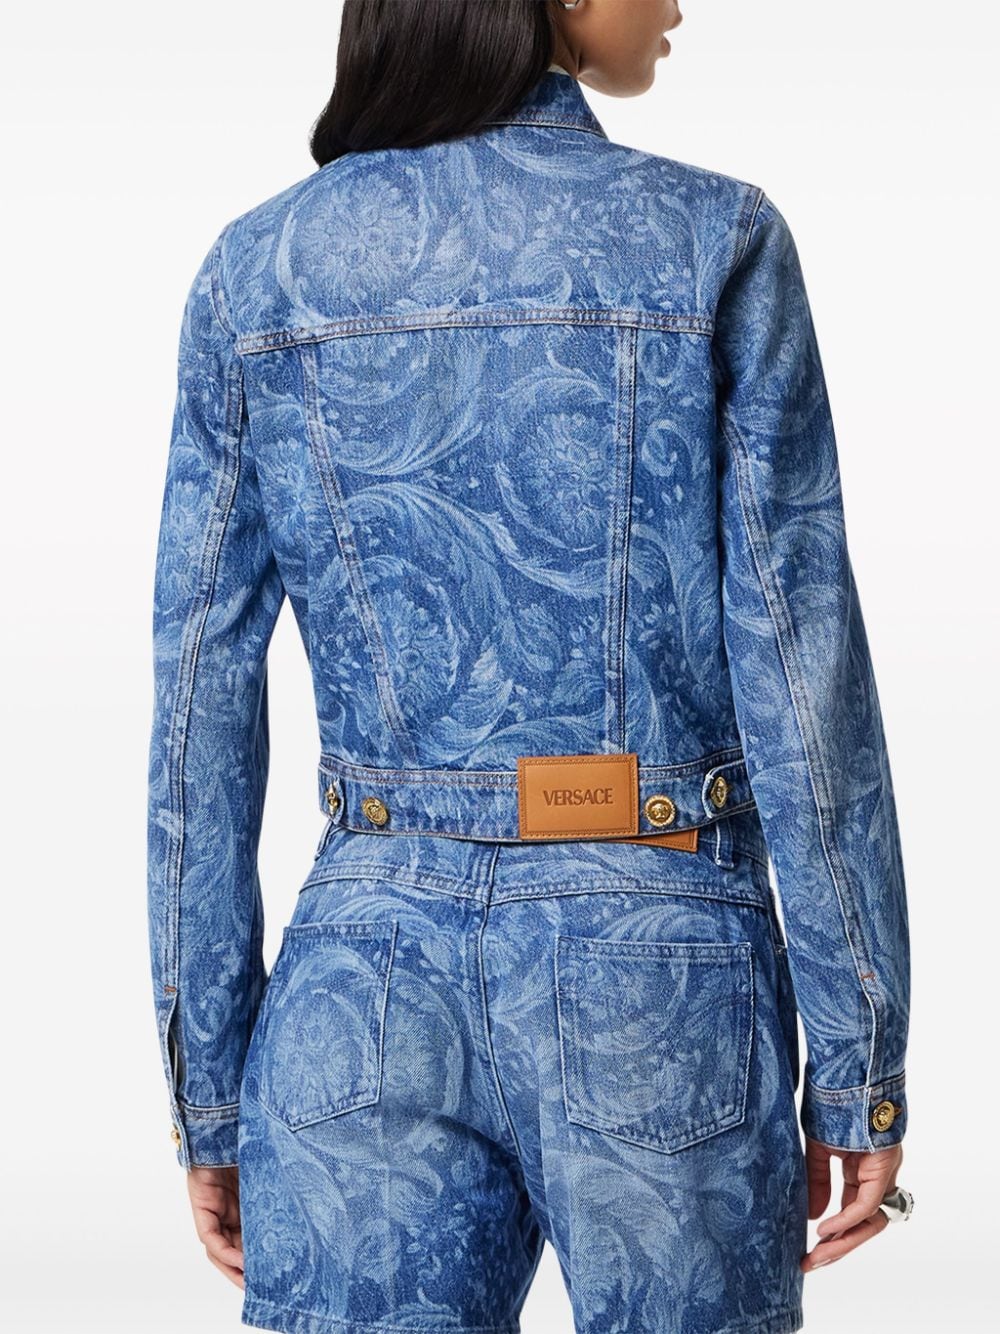 Barocco-print denim jacket<BR/><BR/><BR/>